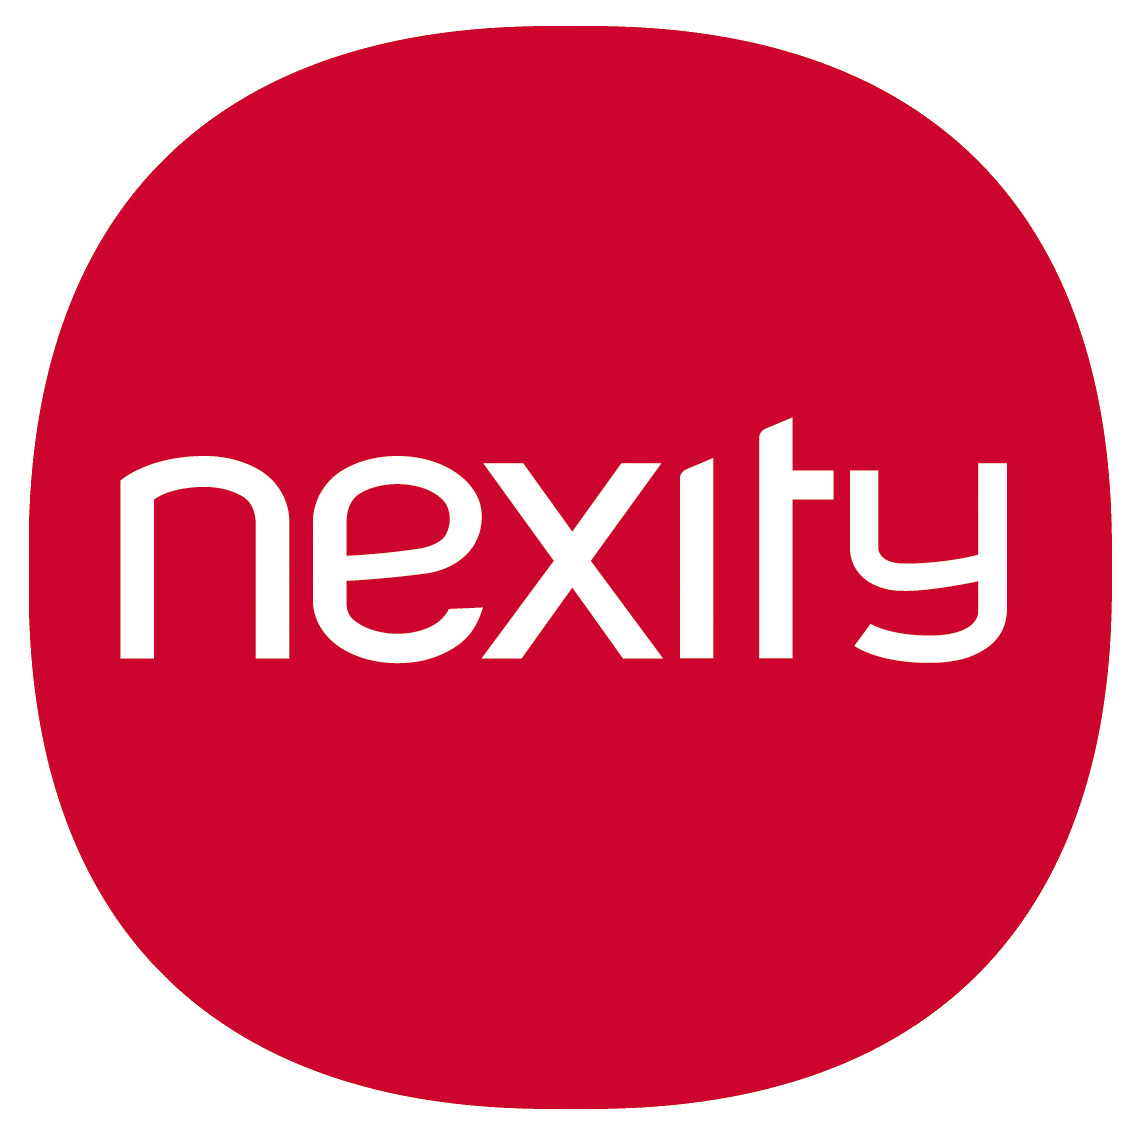 Client Nexity